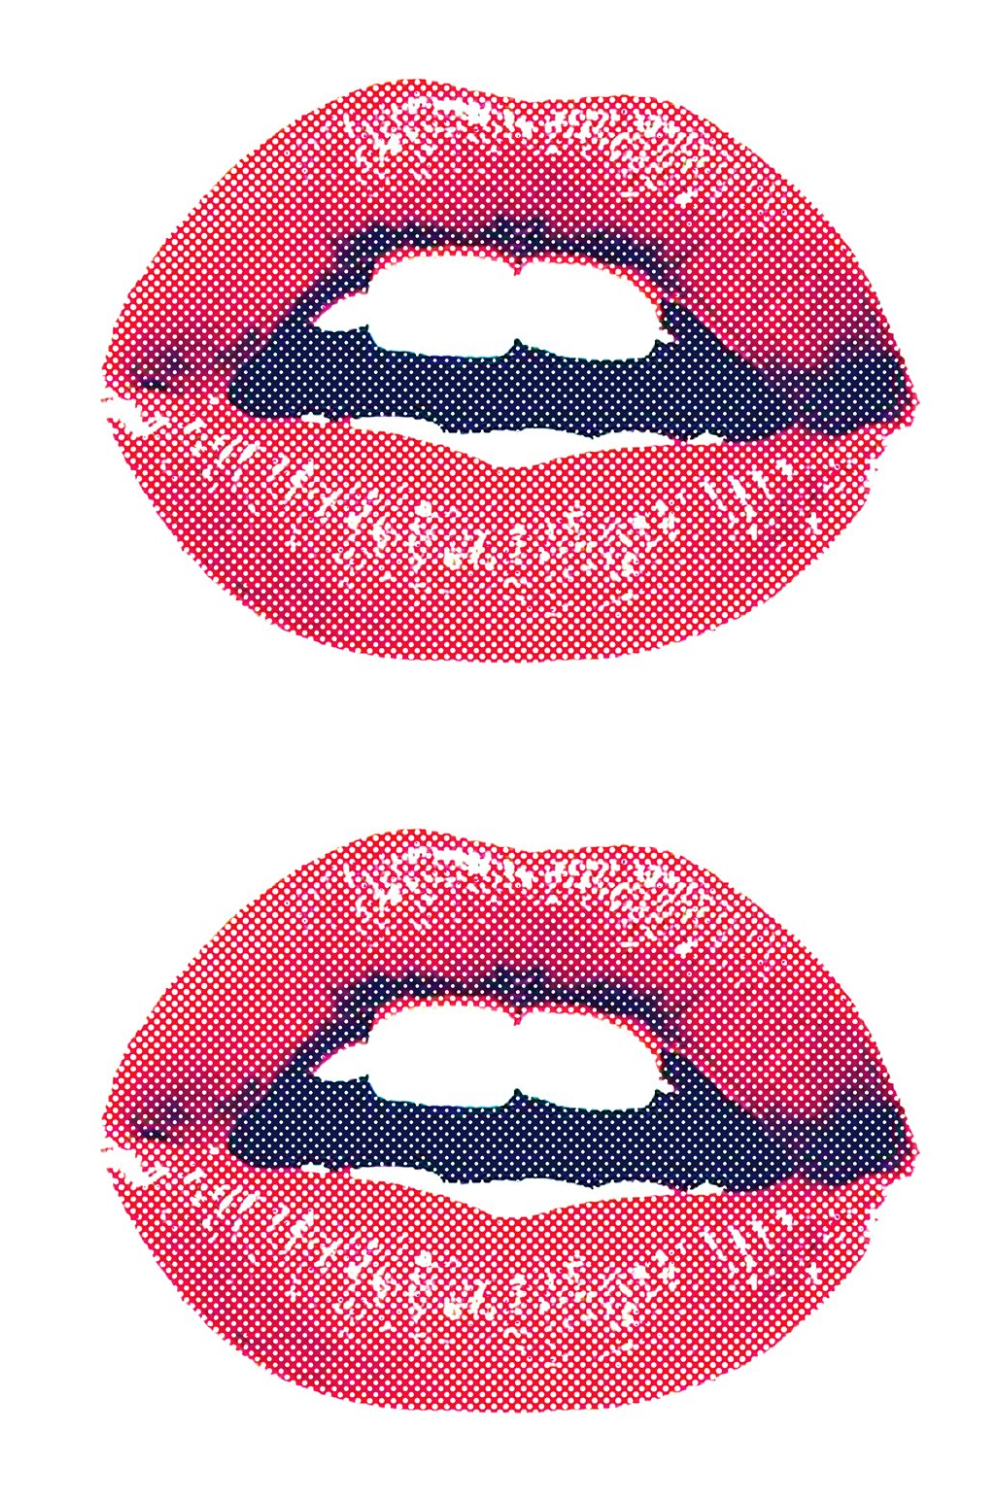 Hot Lips - Pinterest.